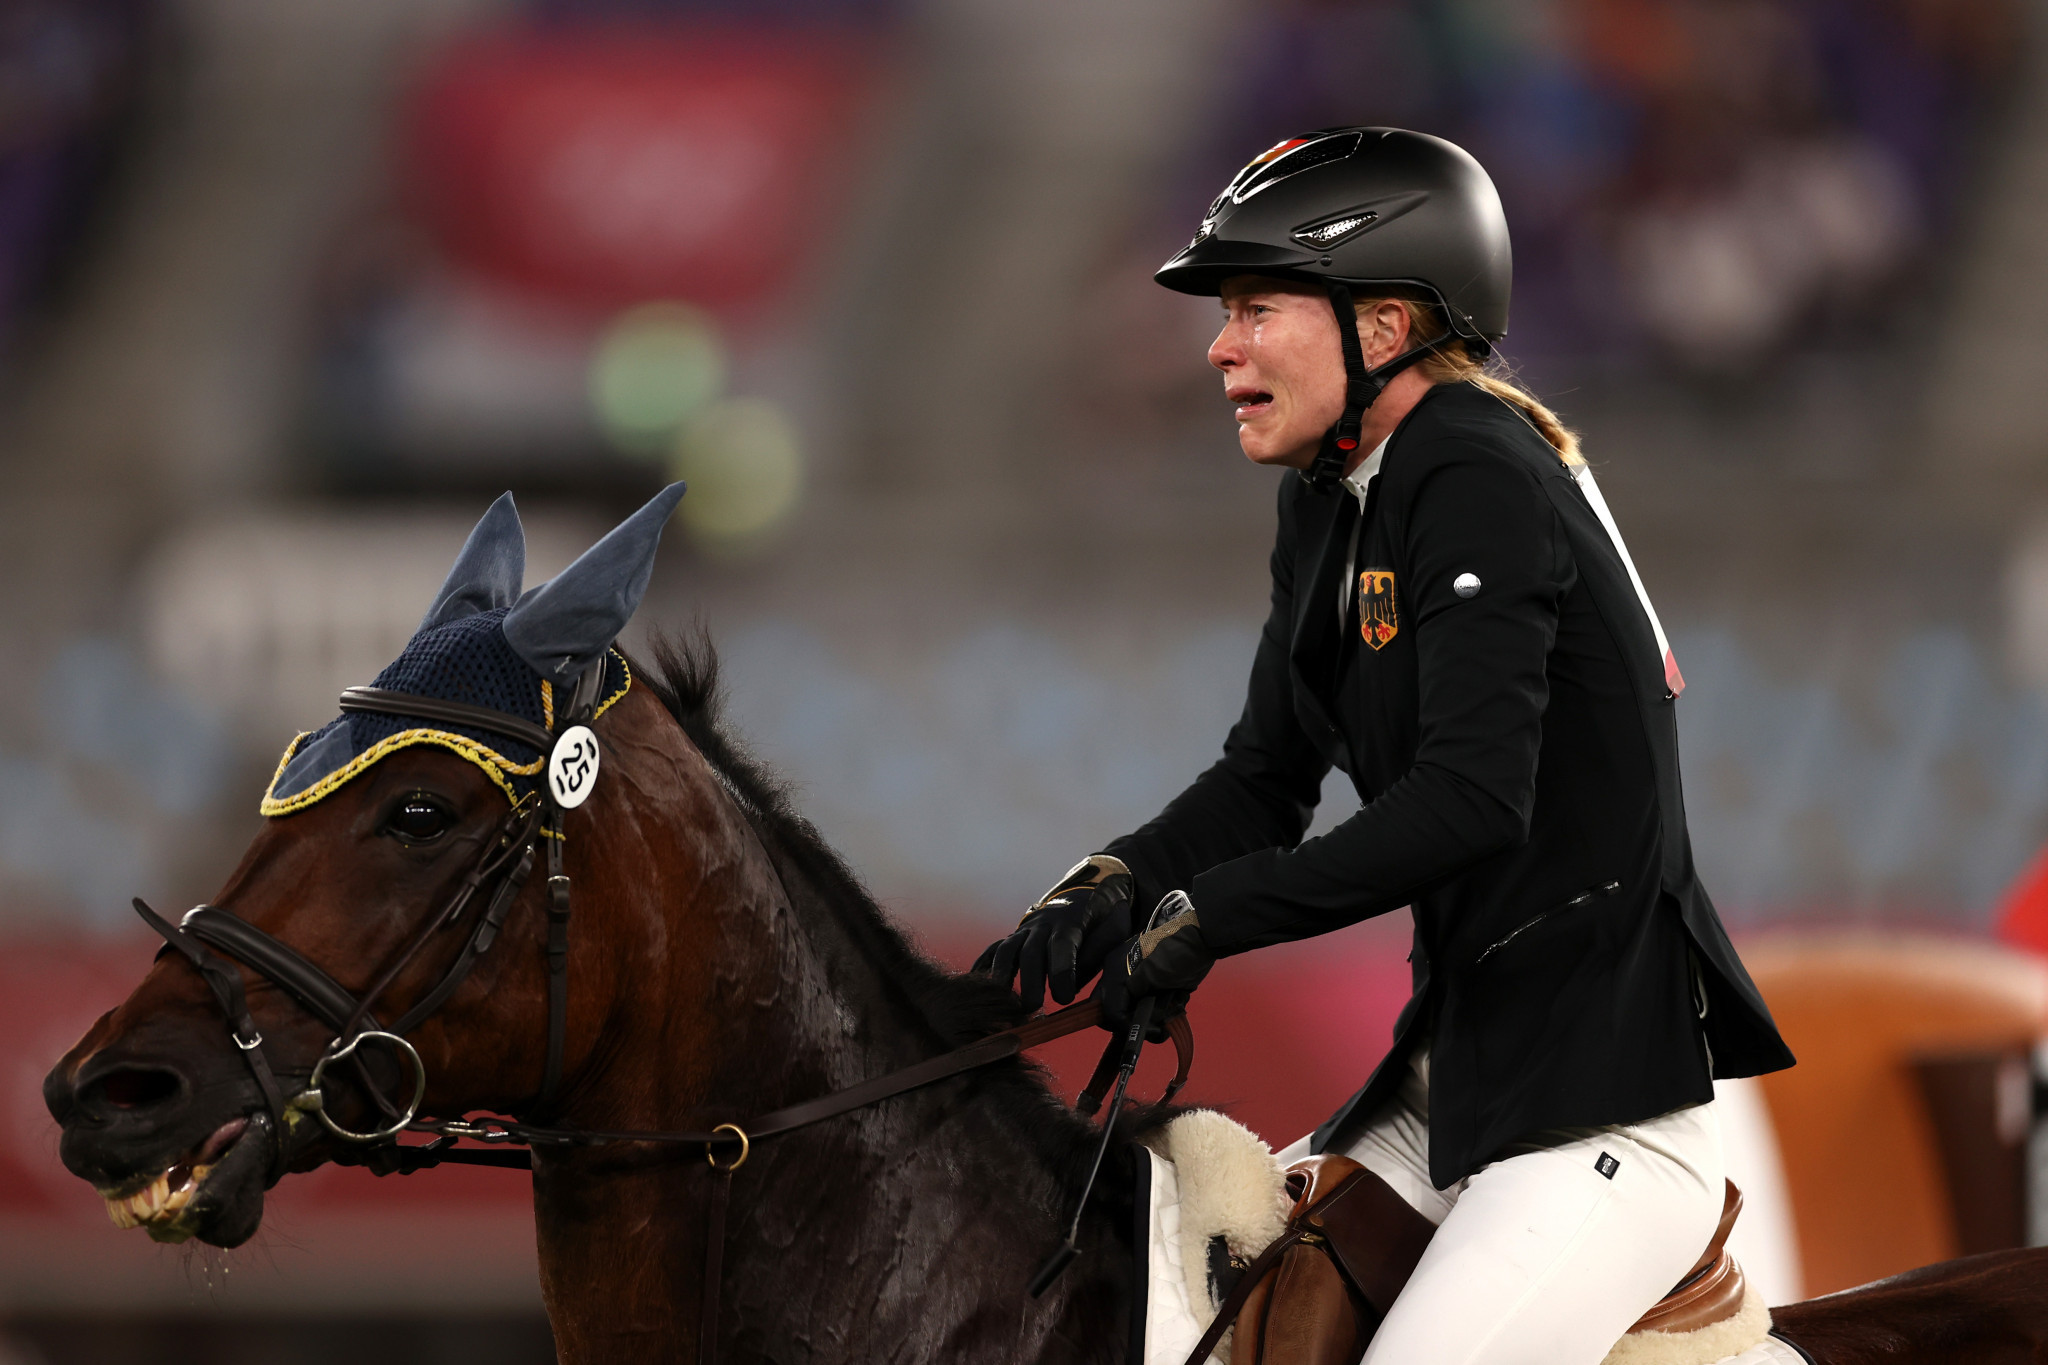 UIPM Disciplinary Panel finds German coach Kim Raisner guilty of striking horse at Tokyo 2020